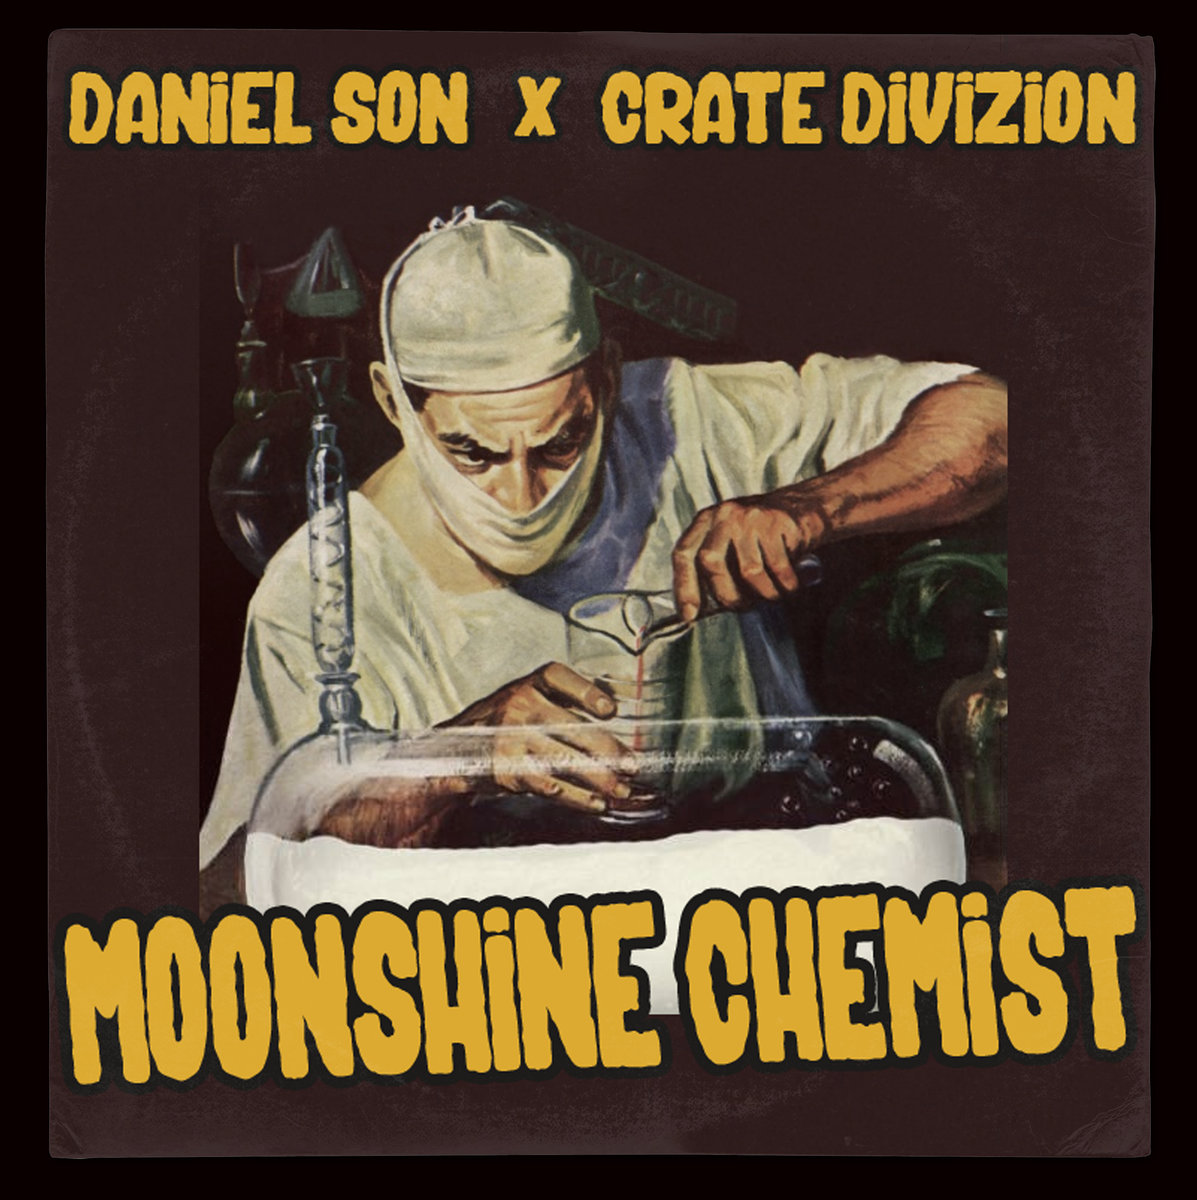 Moonshine_chemist